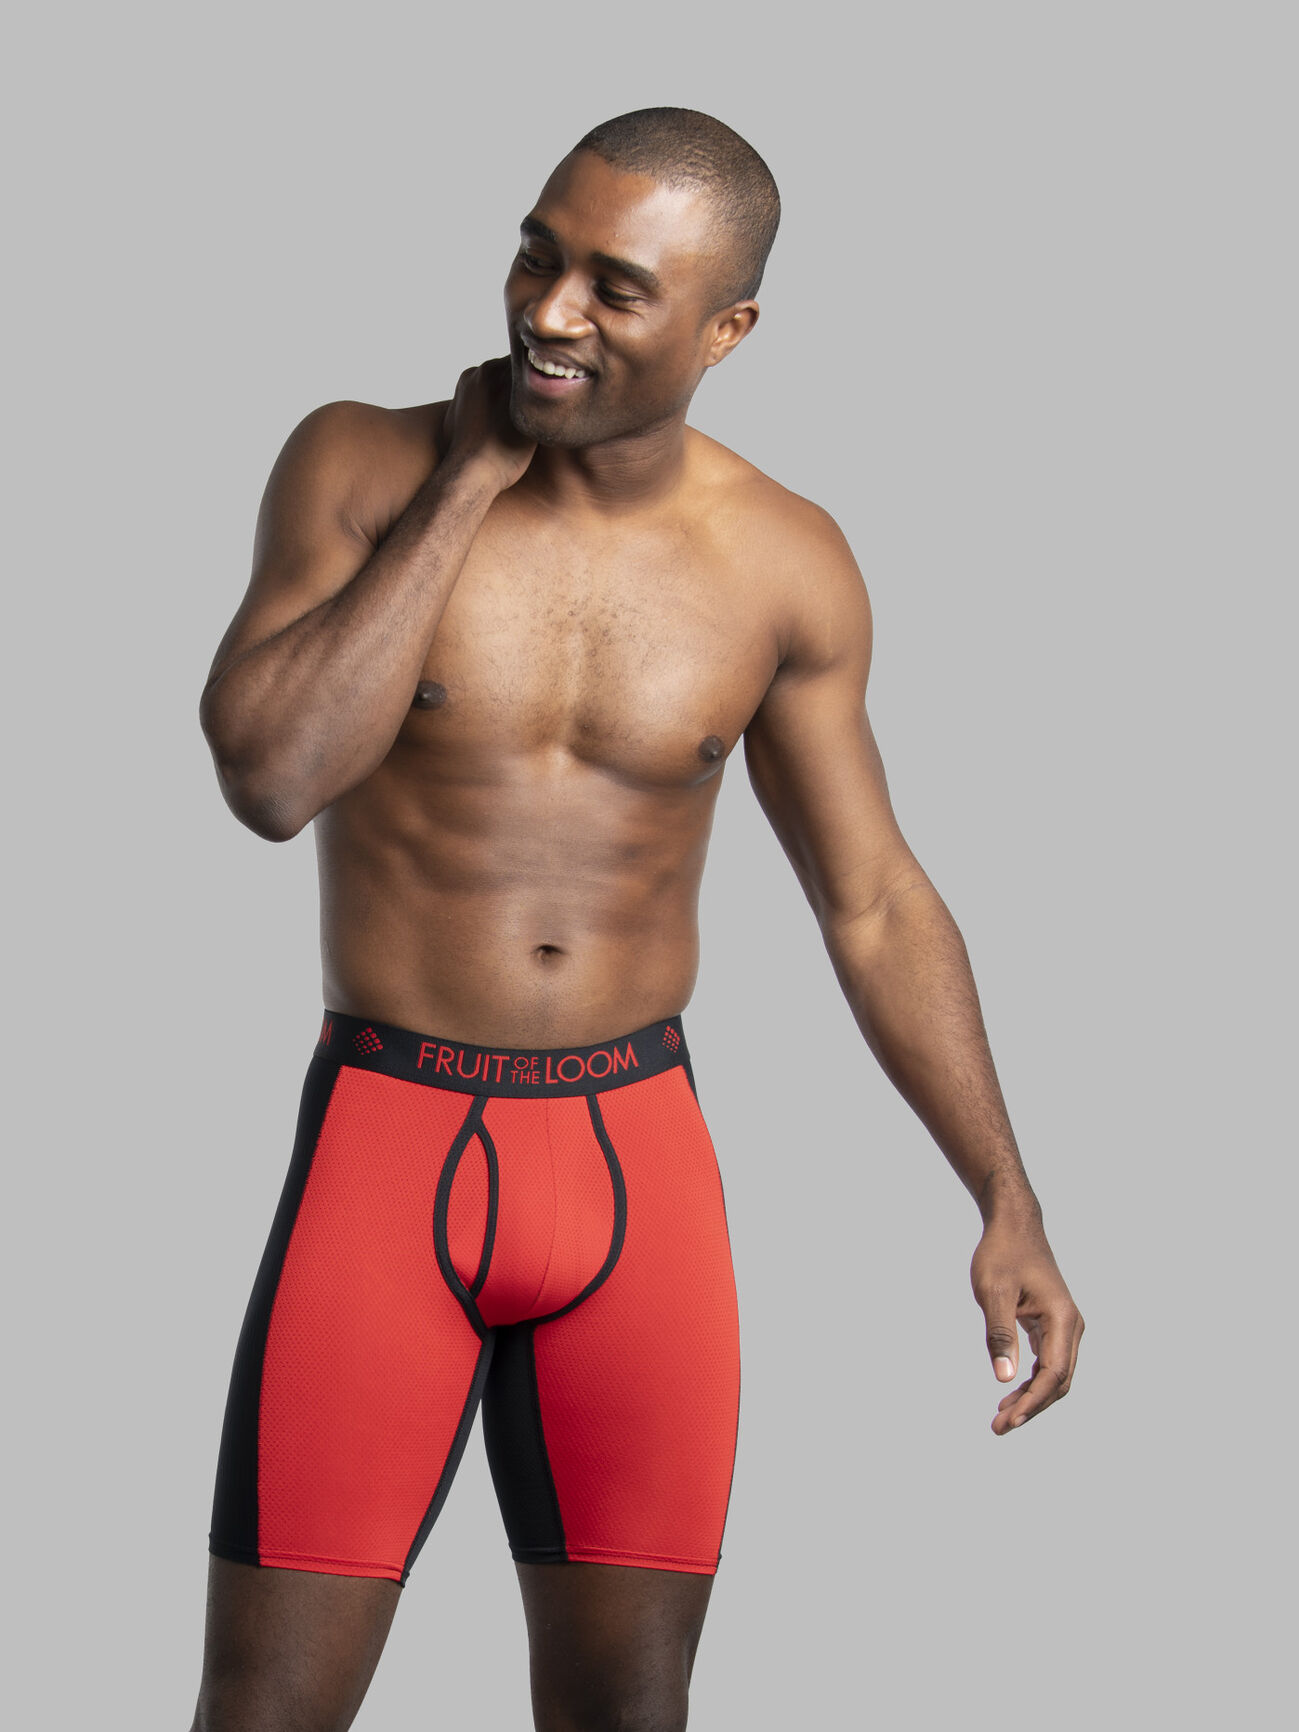 Men's Breathable with Ultra Flex Long Leg Boxer Briefs, 3 Pack